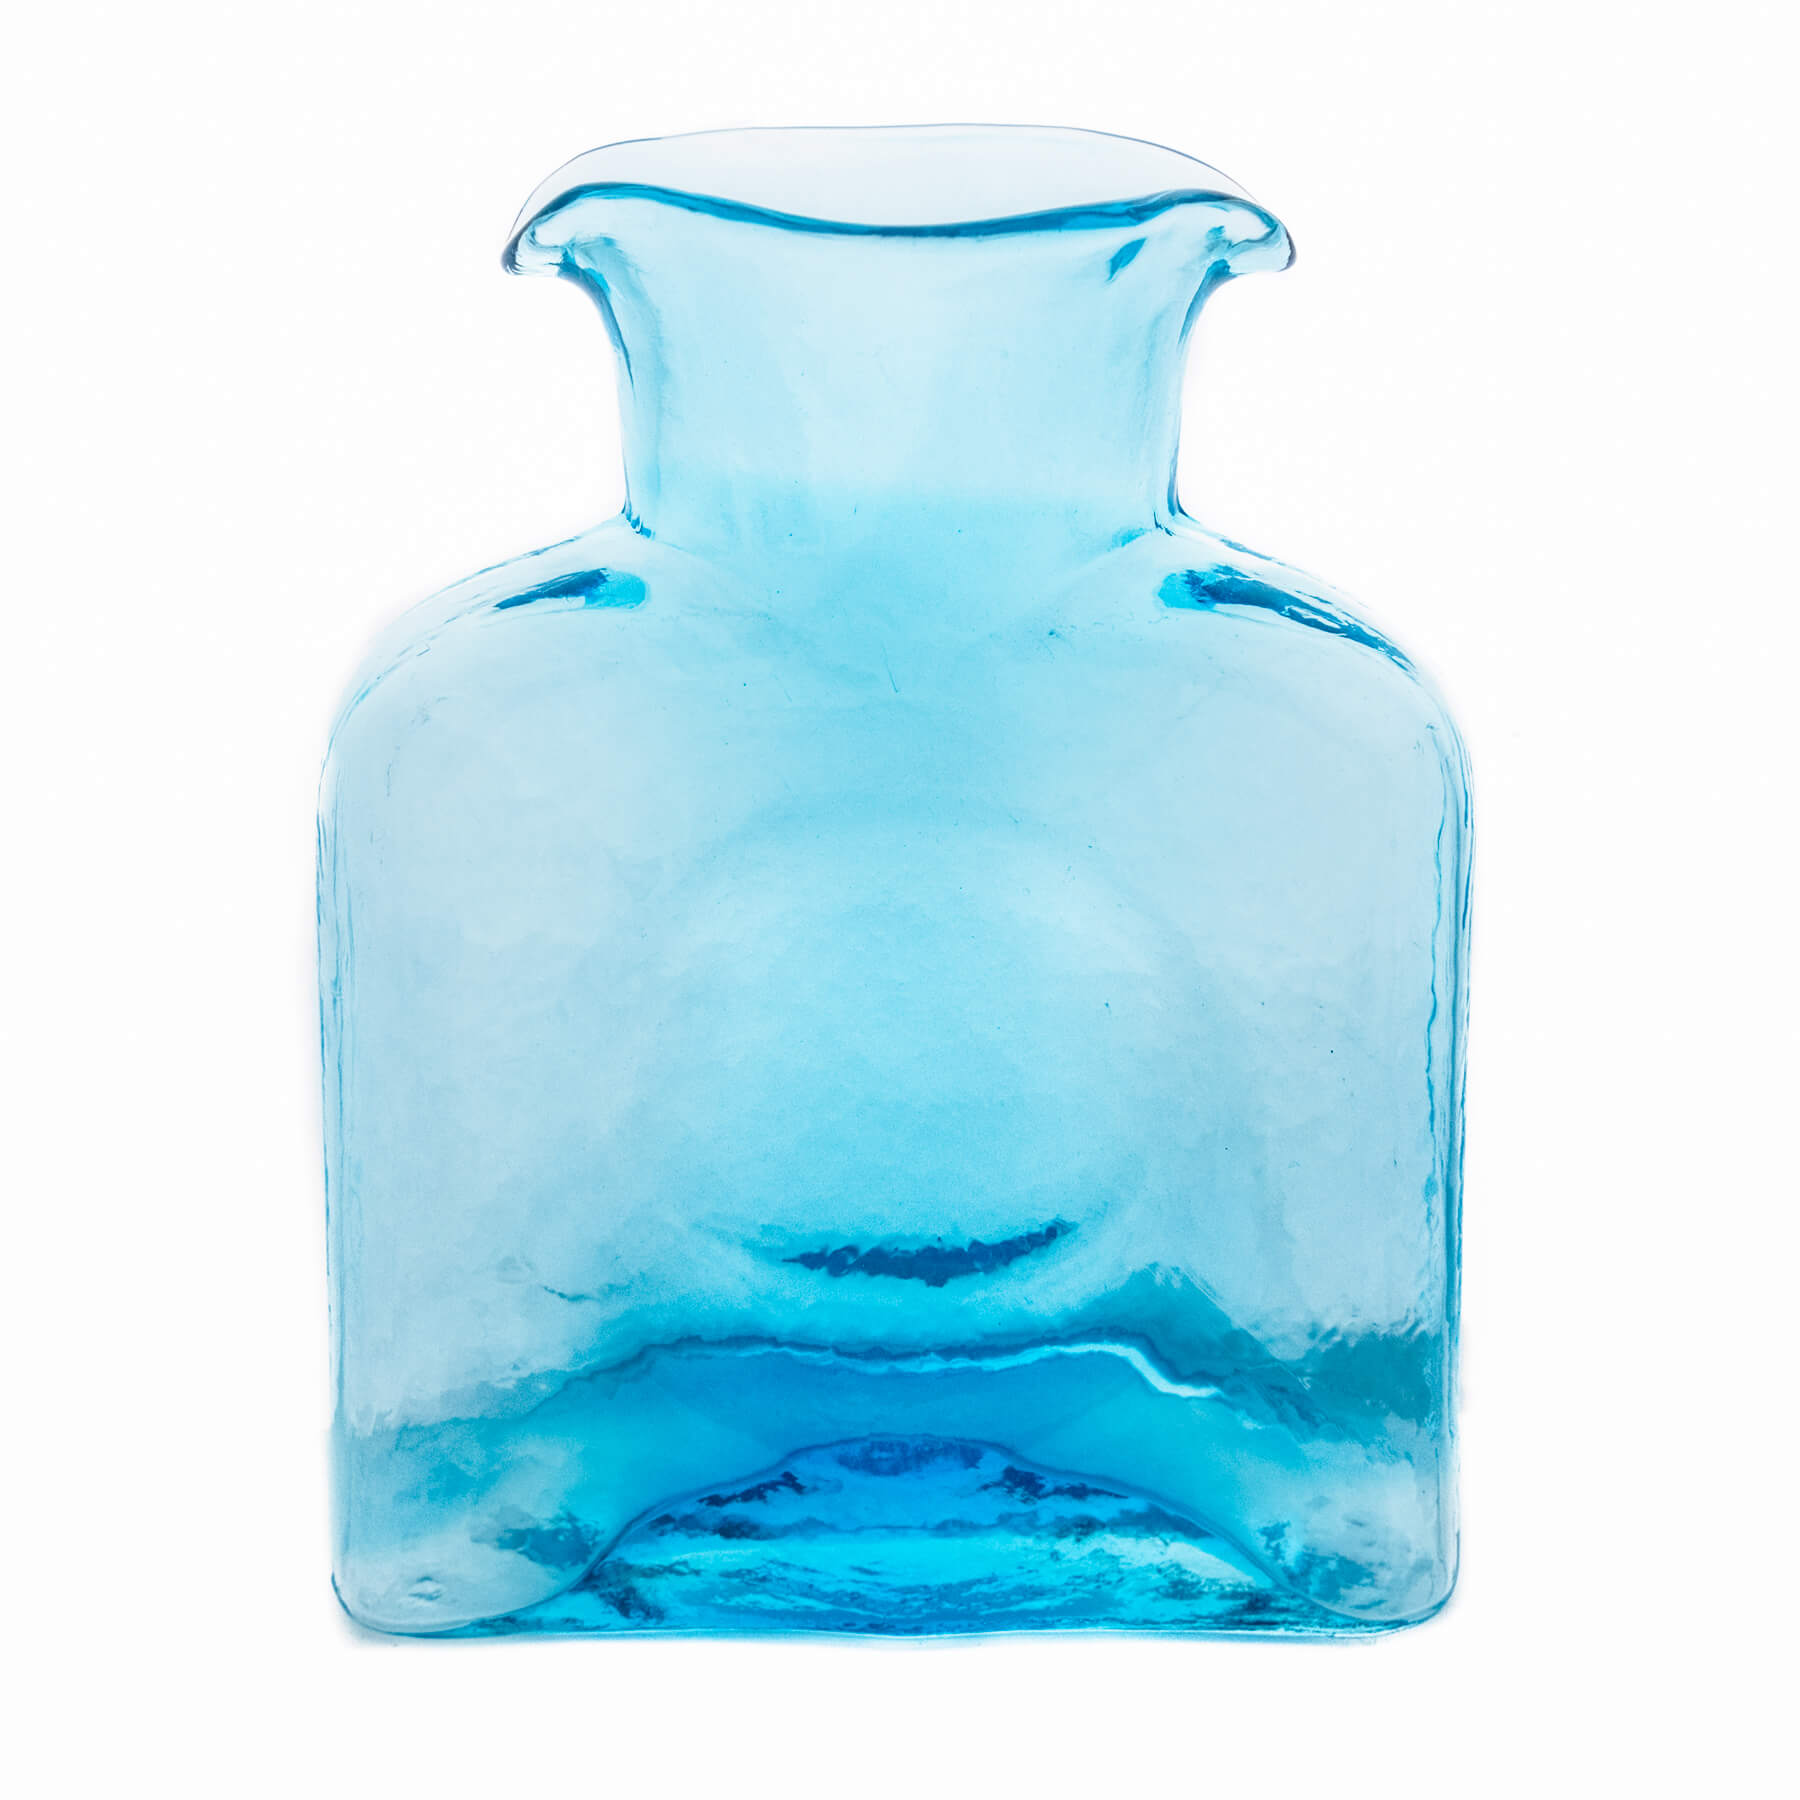 Product photo for Blenko 384 Water Bottle - Ice Blue